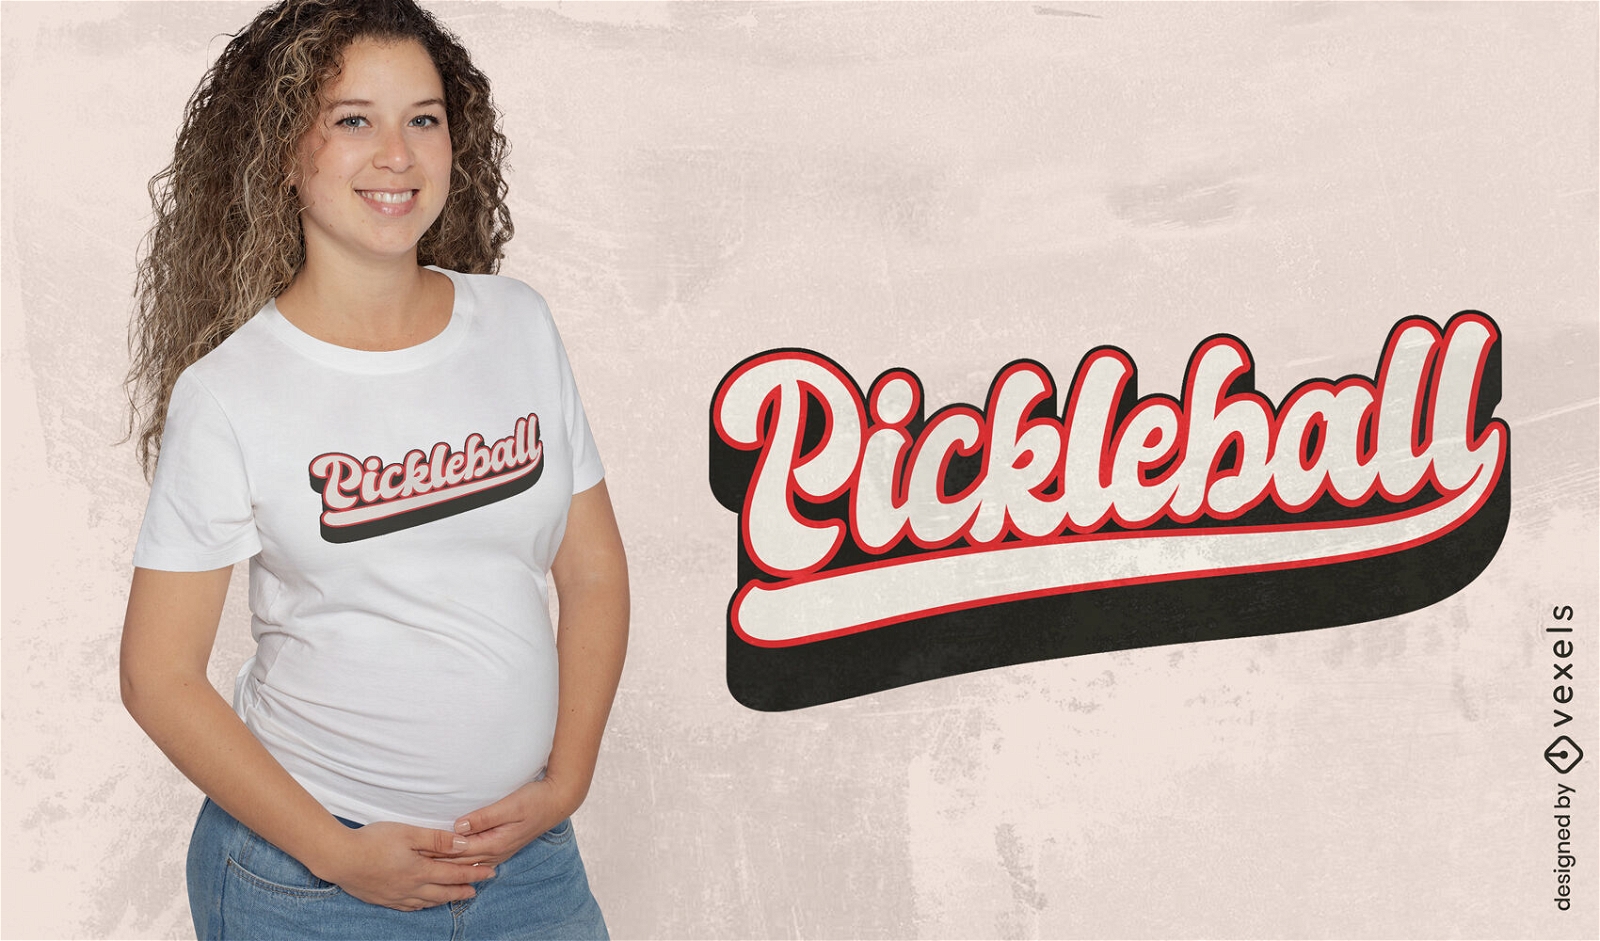 Pickleball quote lettering t-shirt design